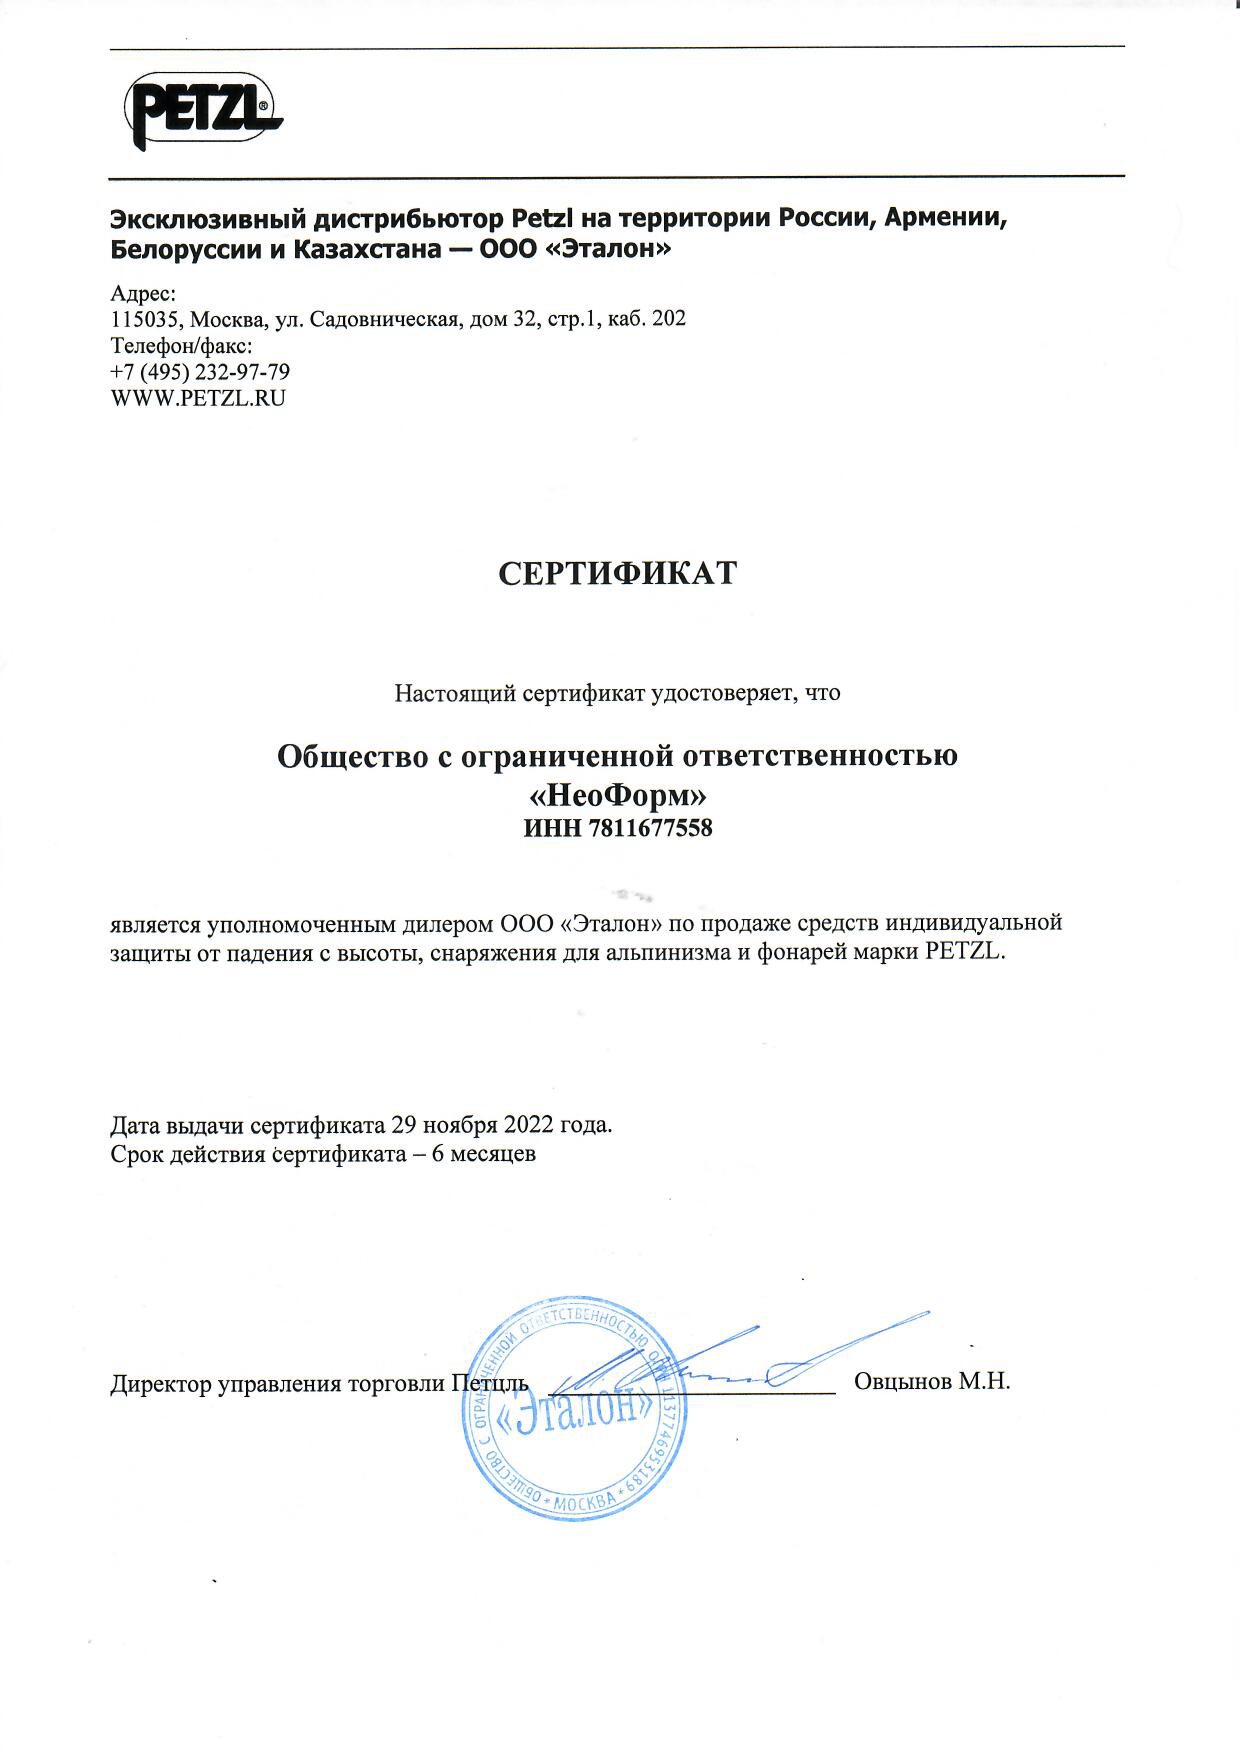 Сертификат дилера PETZL